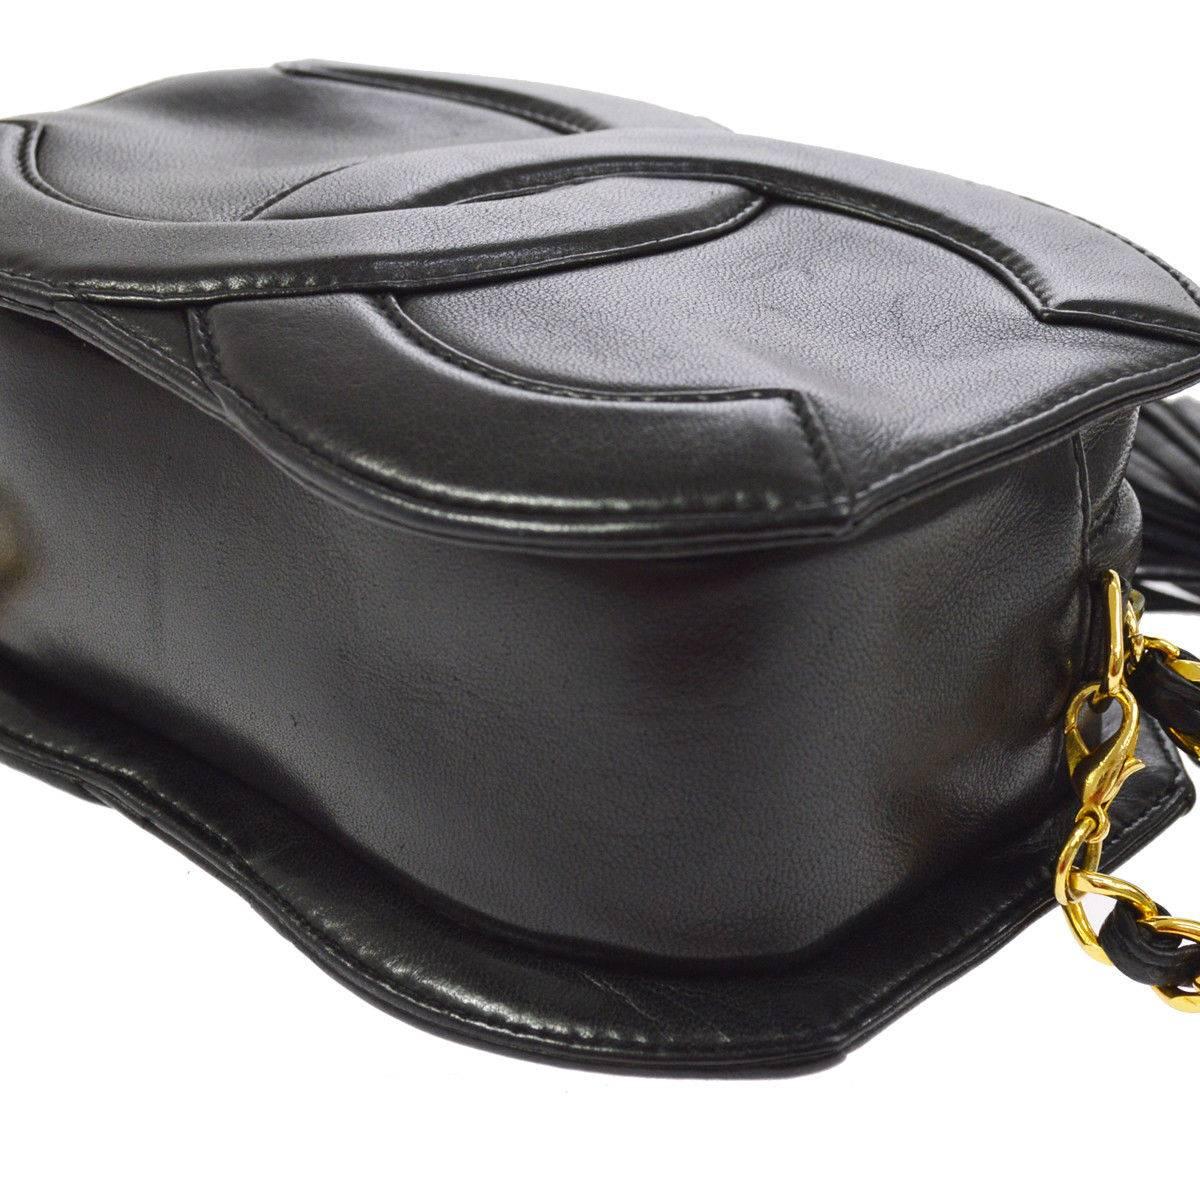 Chanel Black Leather Gold Charm Evening Party Crossbody Camera Shoulder Bag 1